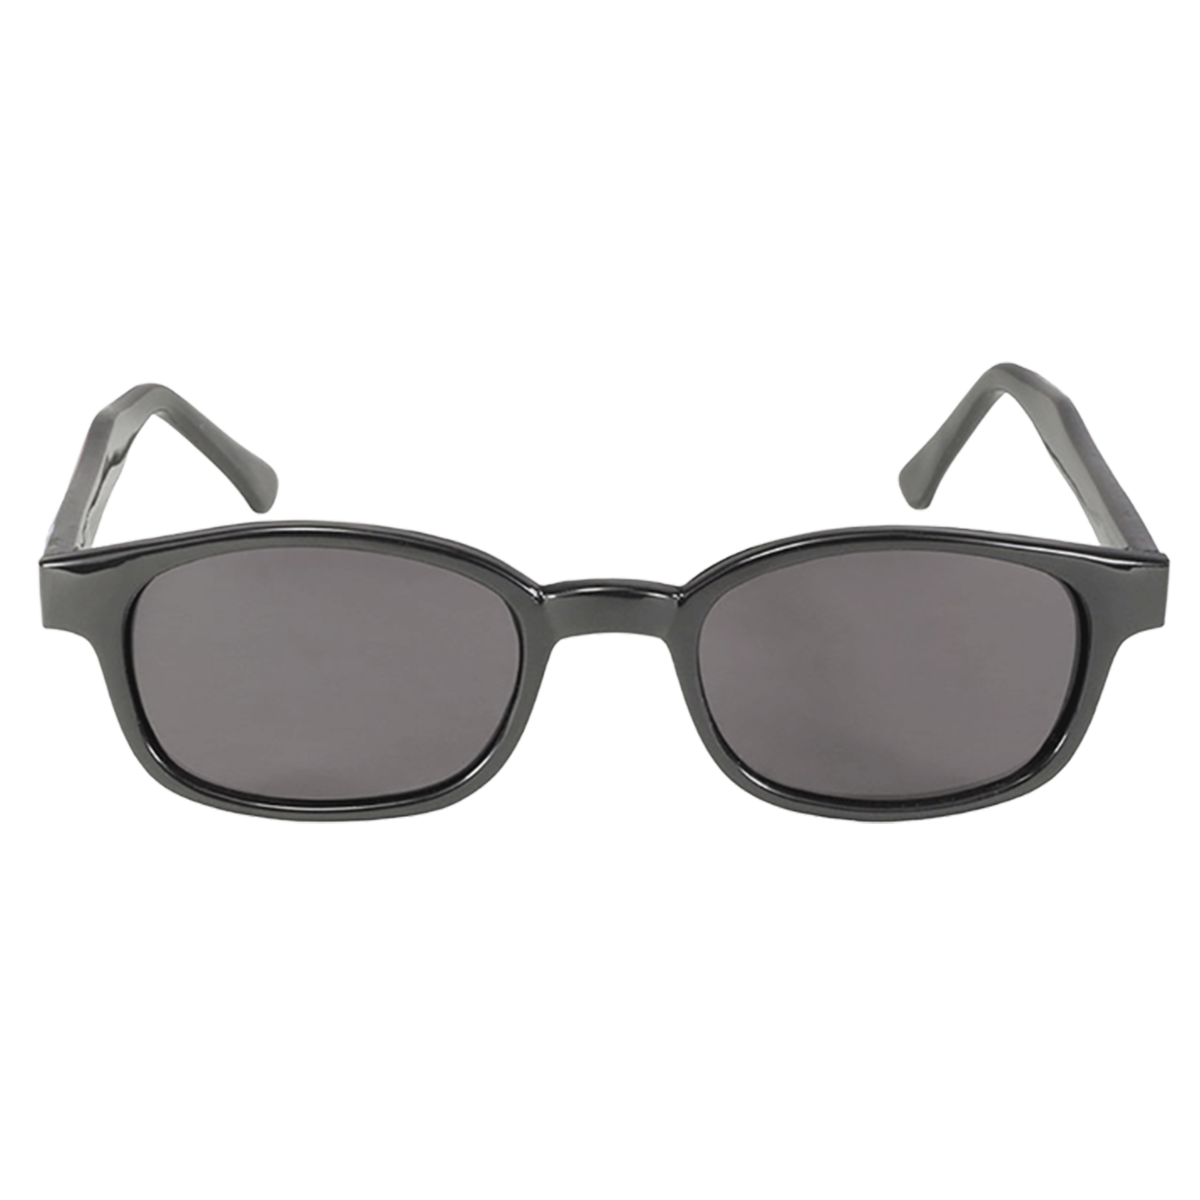 Sunglasses KD's 20050 - smoked lenses - US flag design -